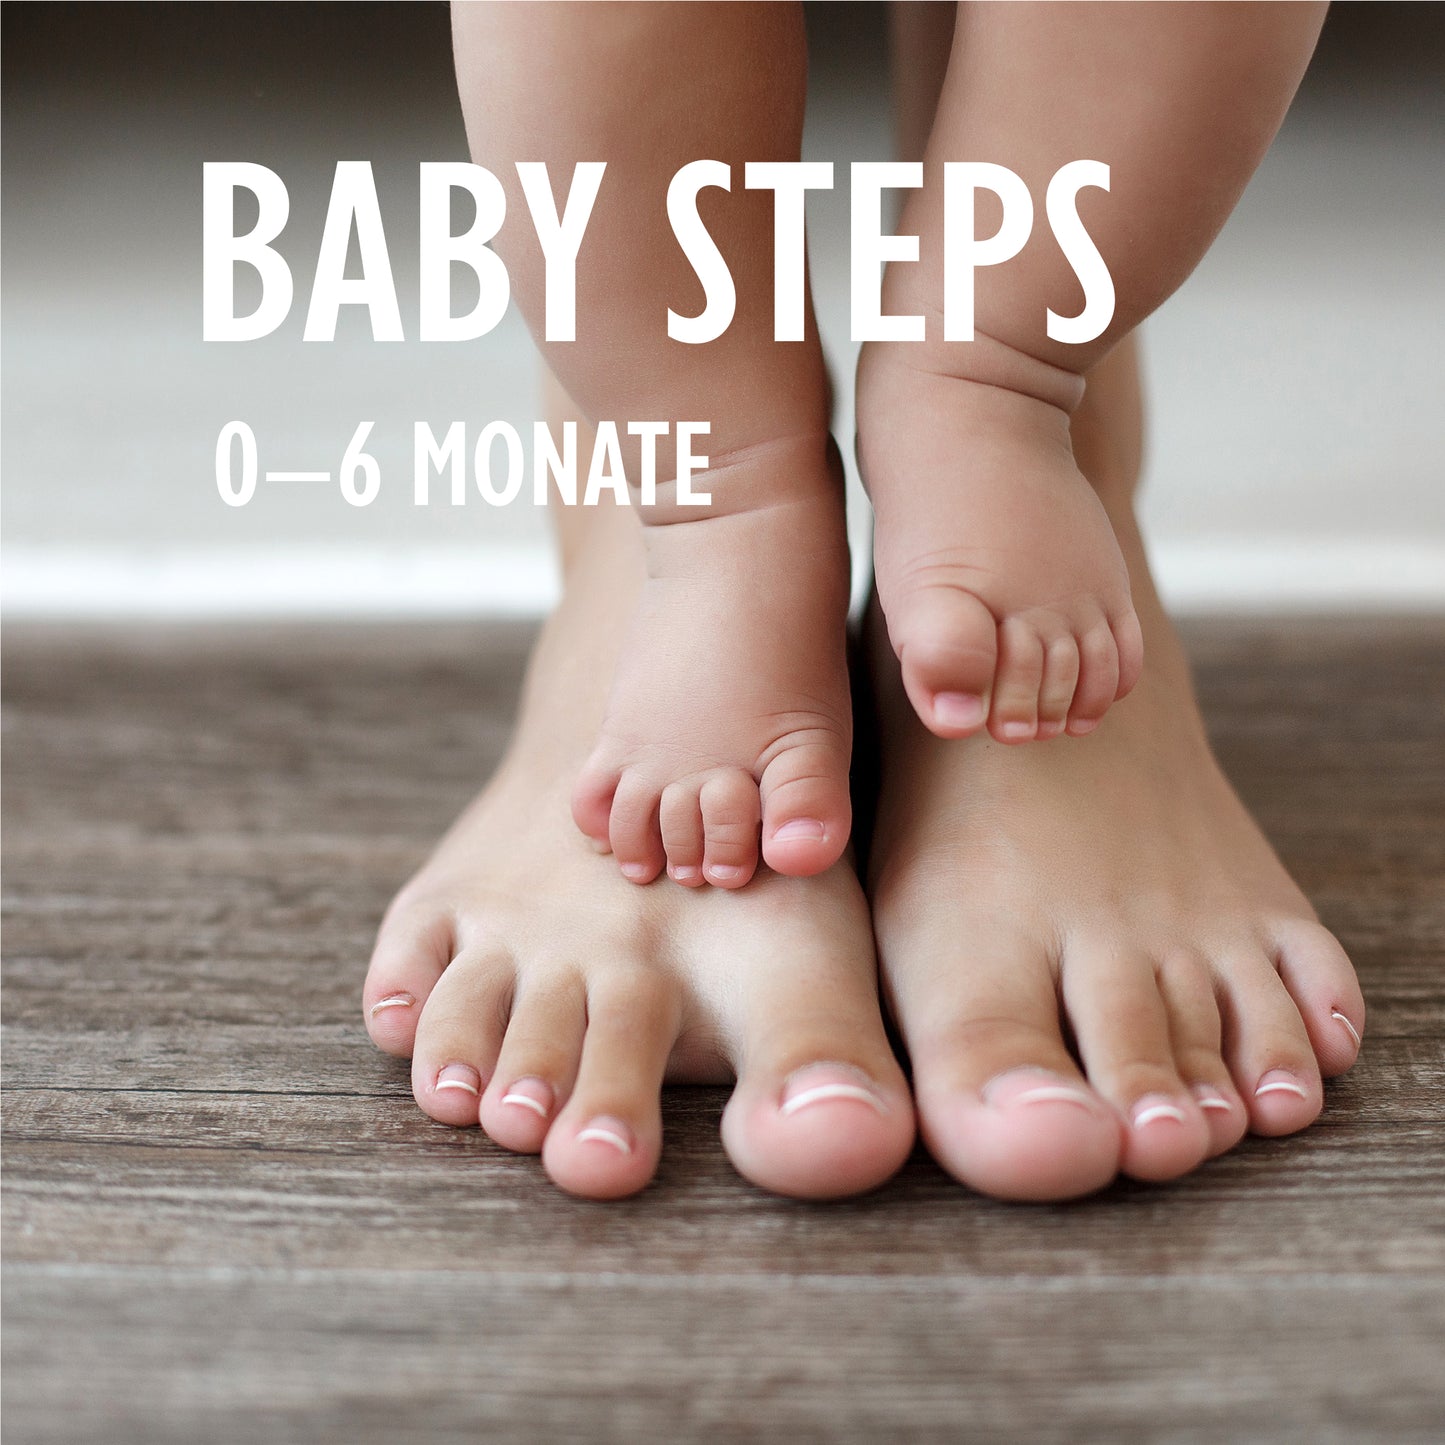 BabySteps Mini 0-6 Monate | Kurs 7 Wochen | coming soon